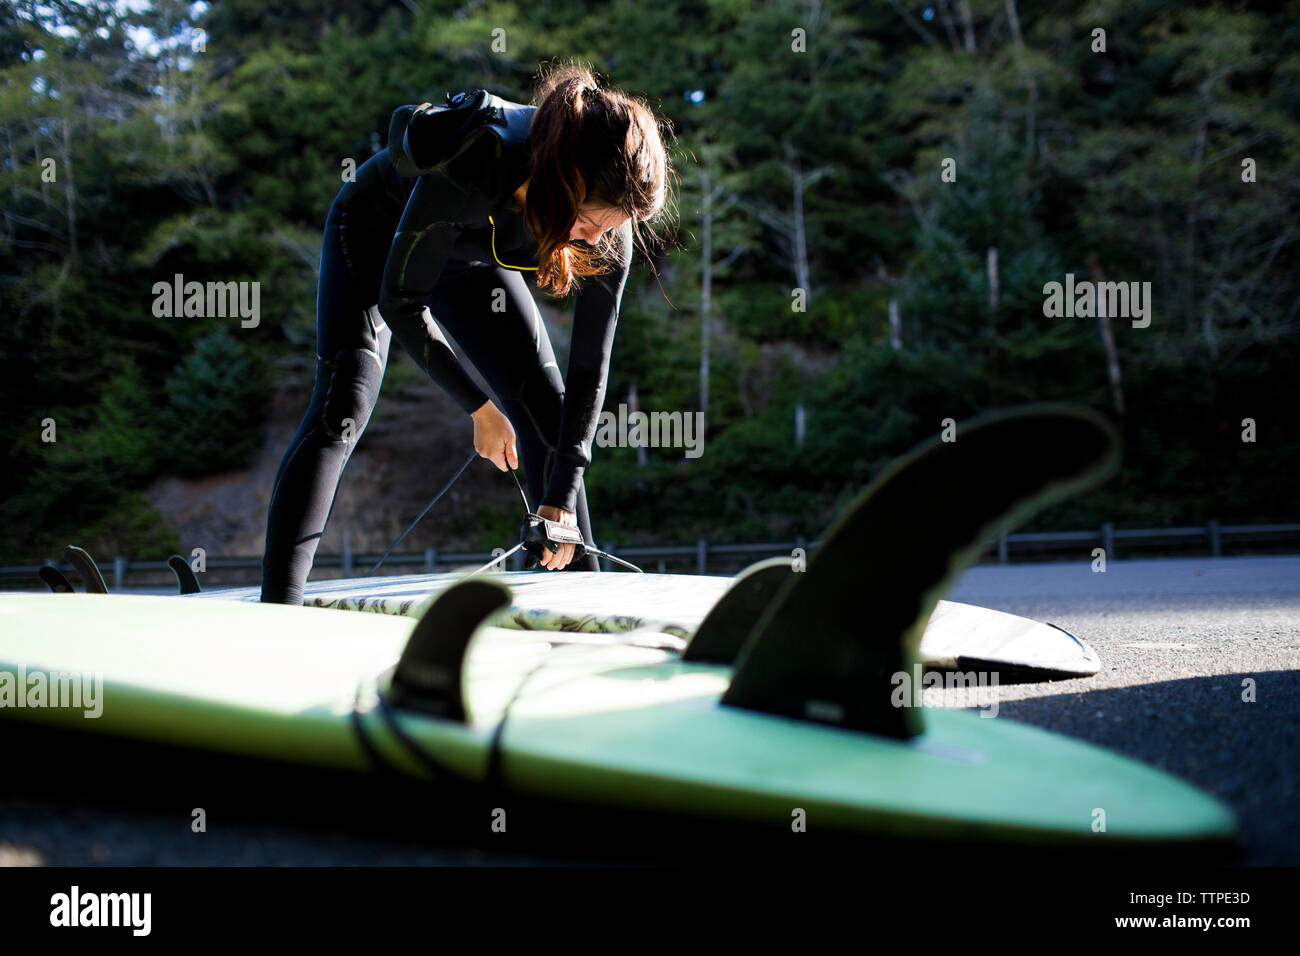 Woman wearing wetsuit préparer surfboard at beach Banque D'Images